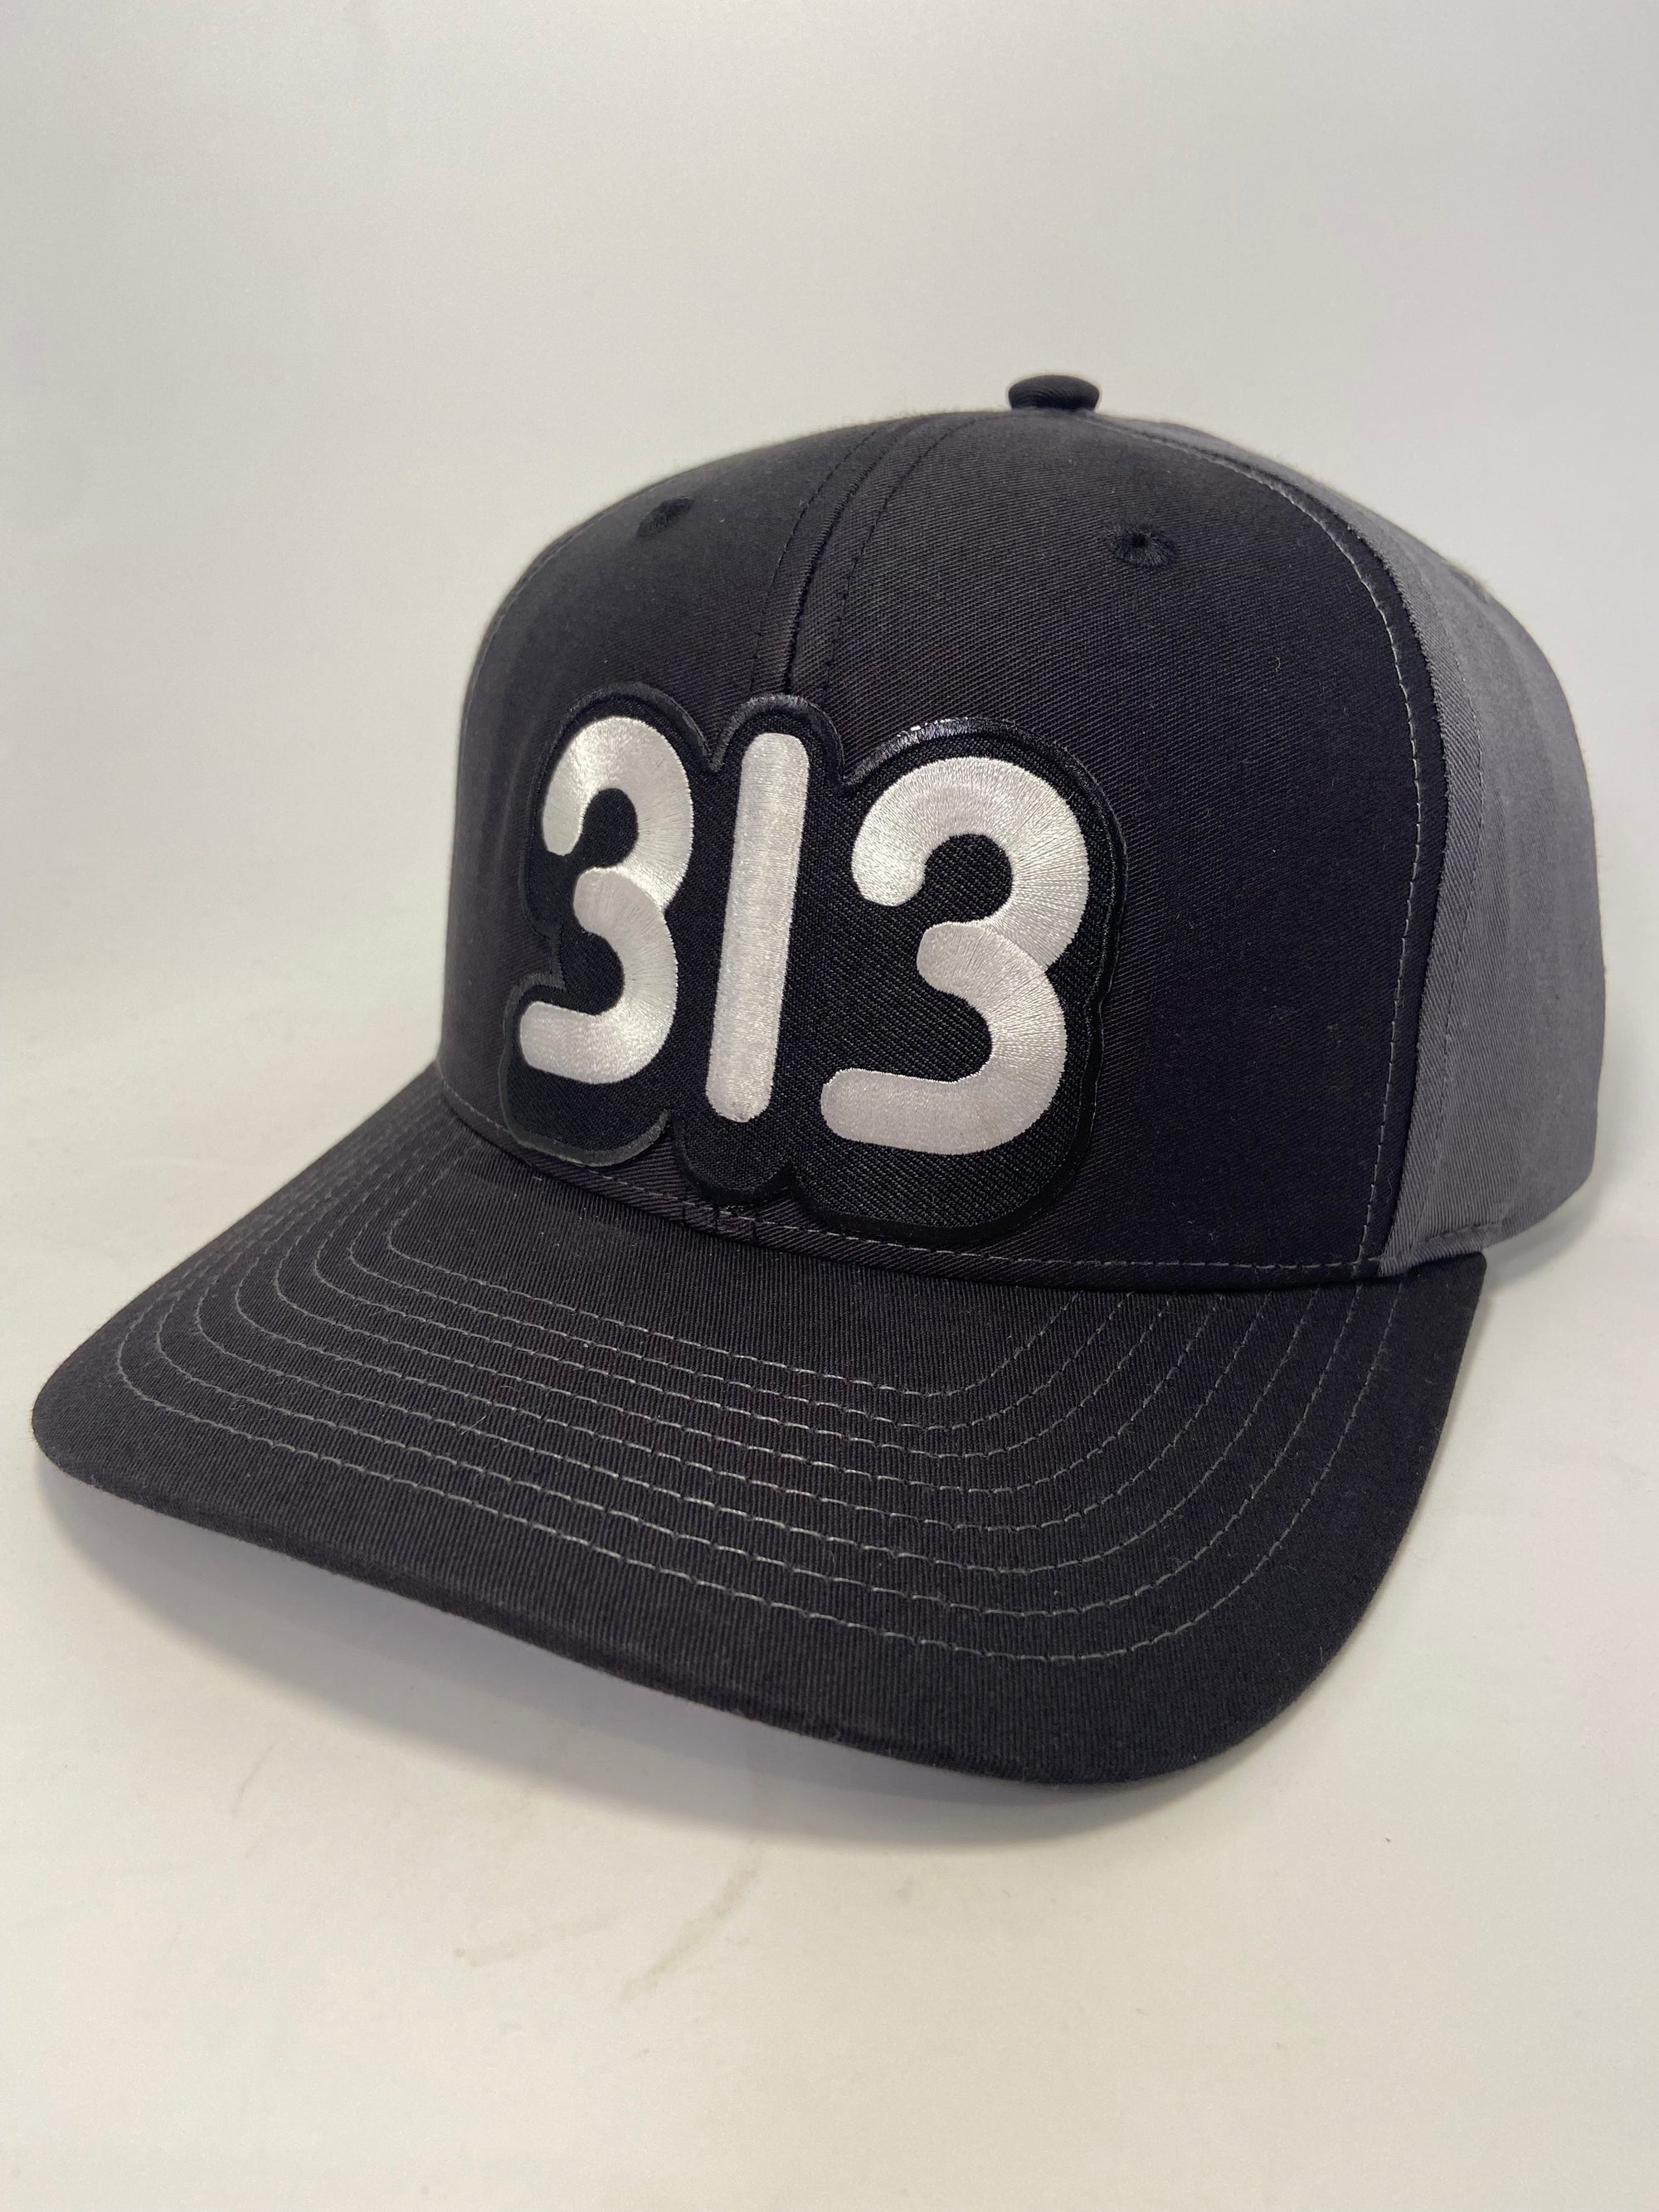 313 Snapback Hat / Black + Charcoal Hat   